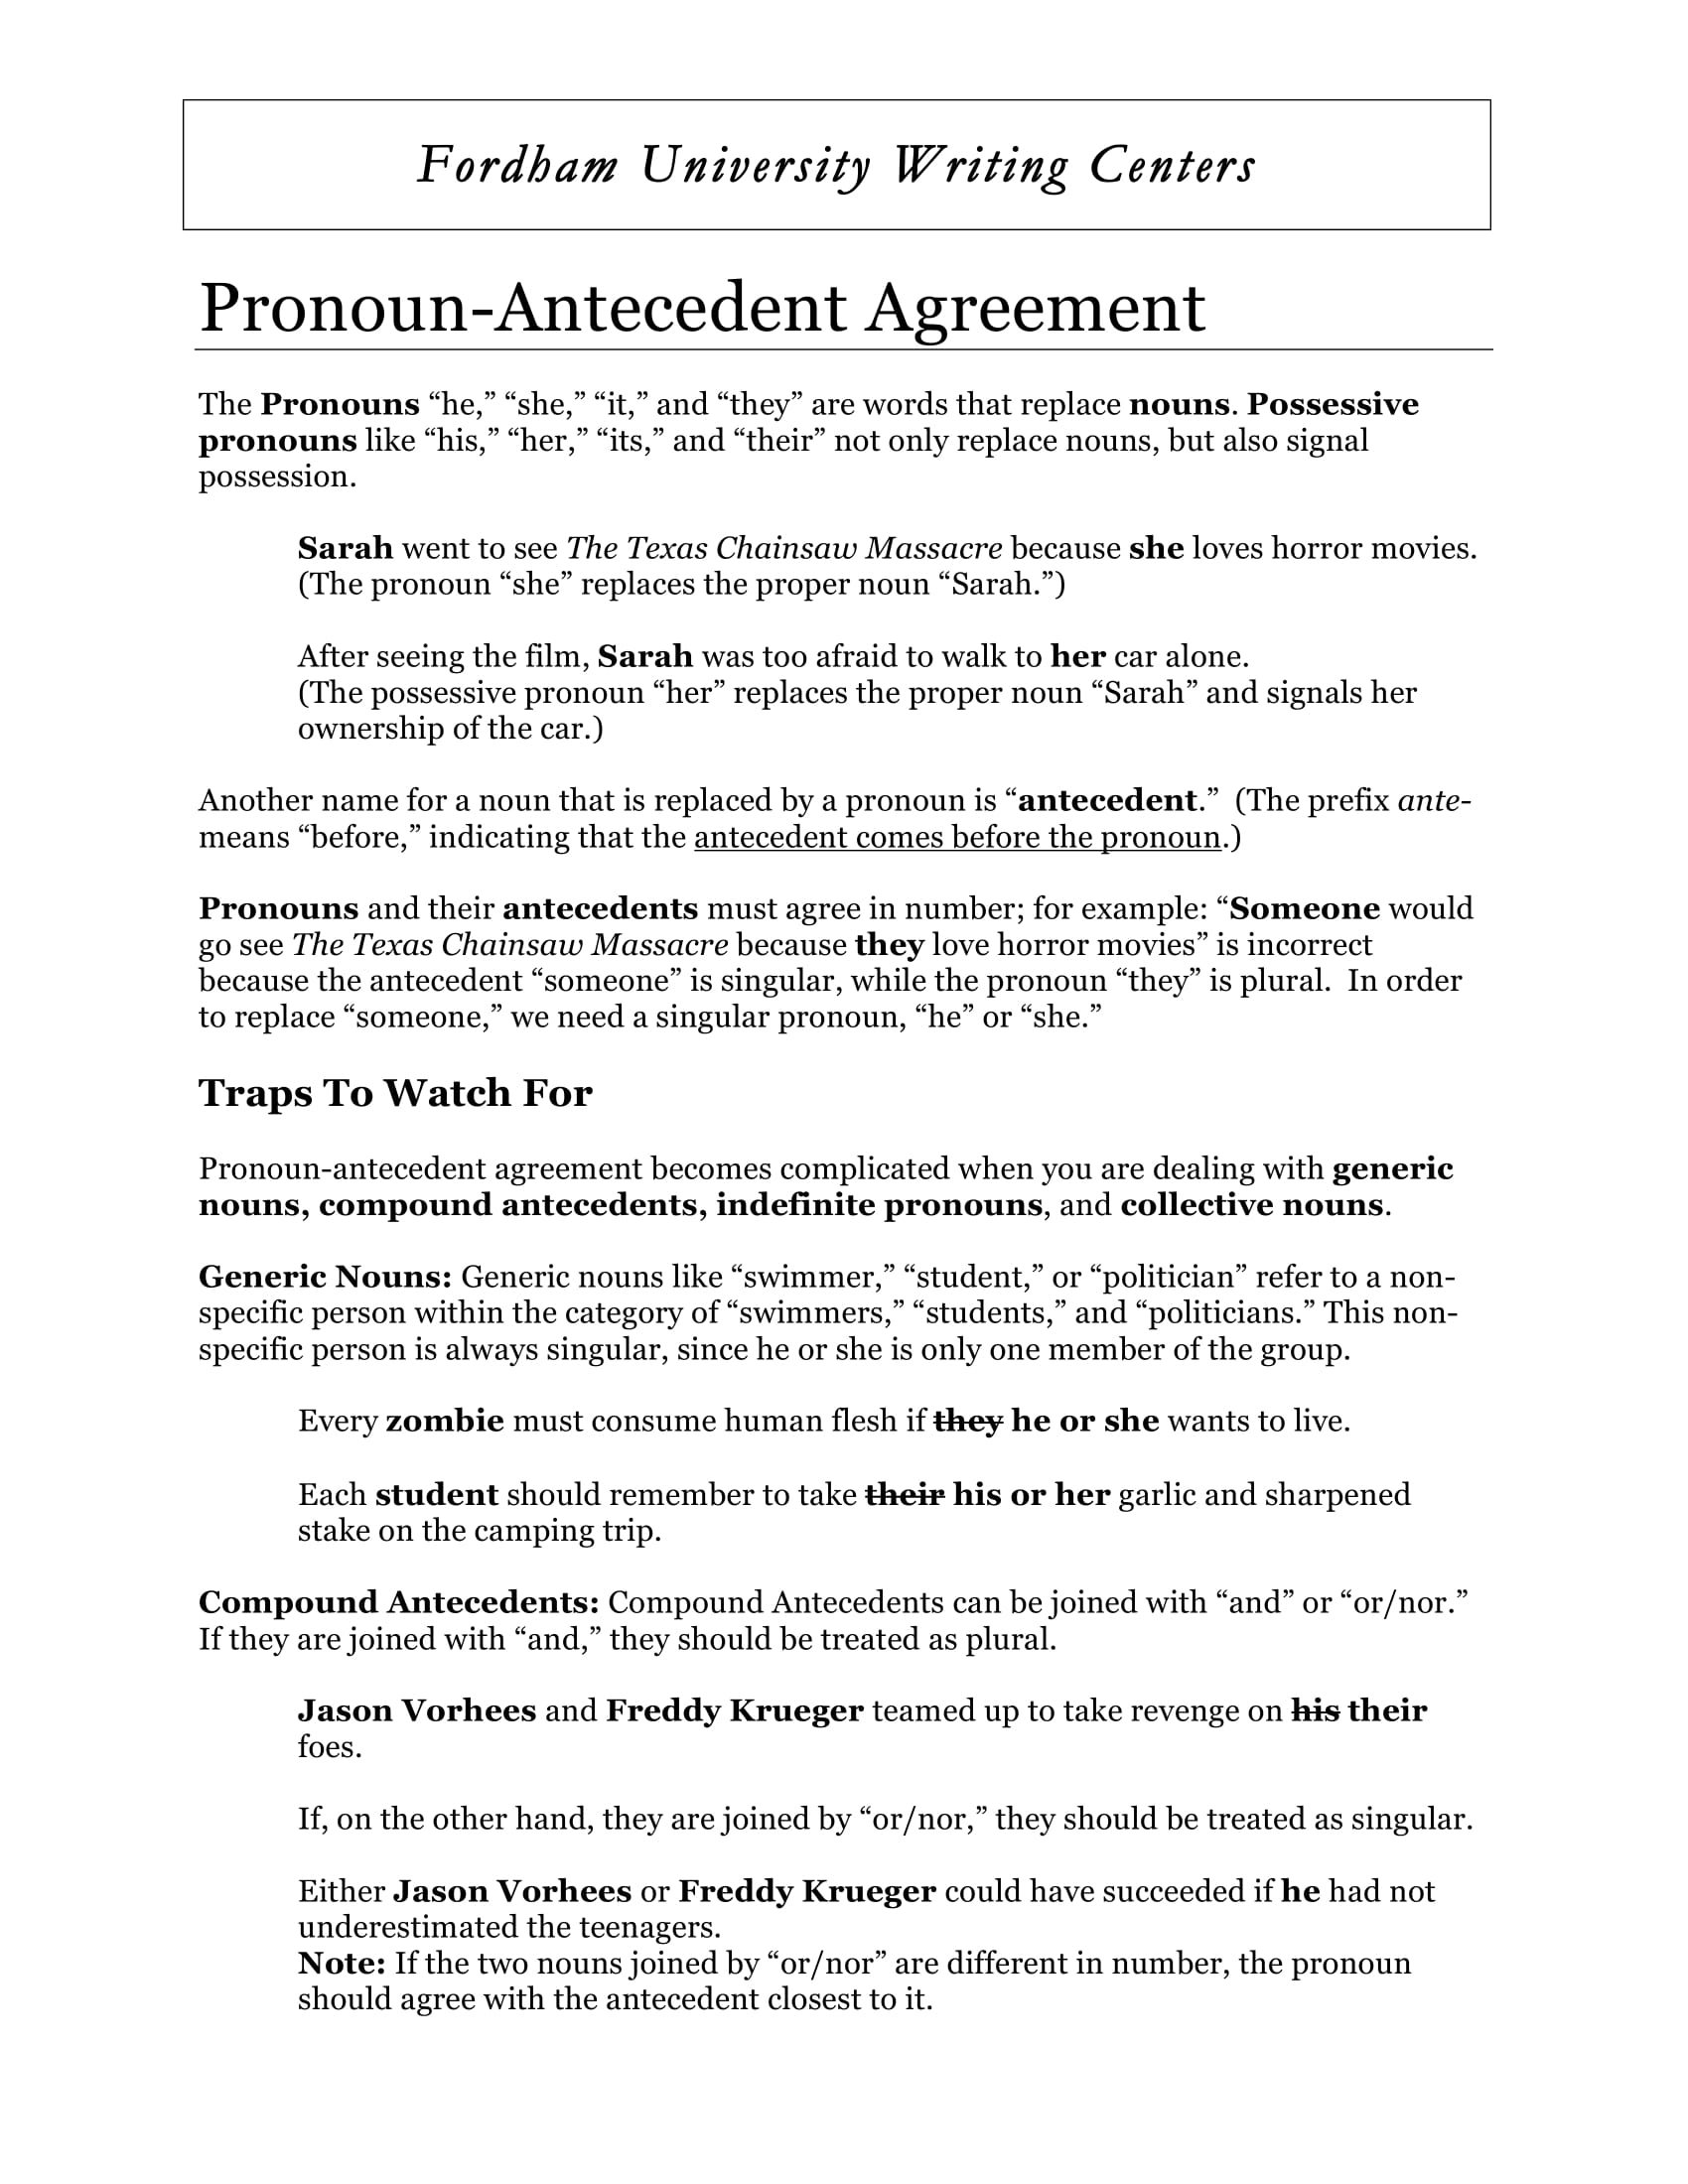 pronoun antecedent agreement reference sheet example